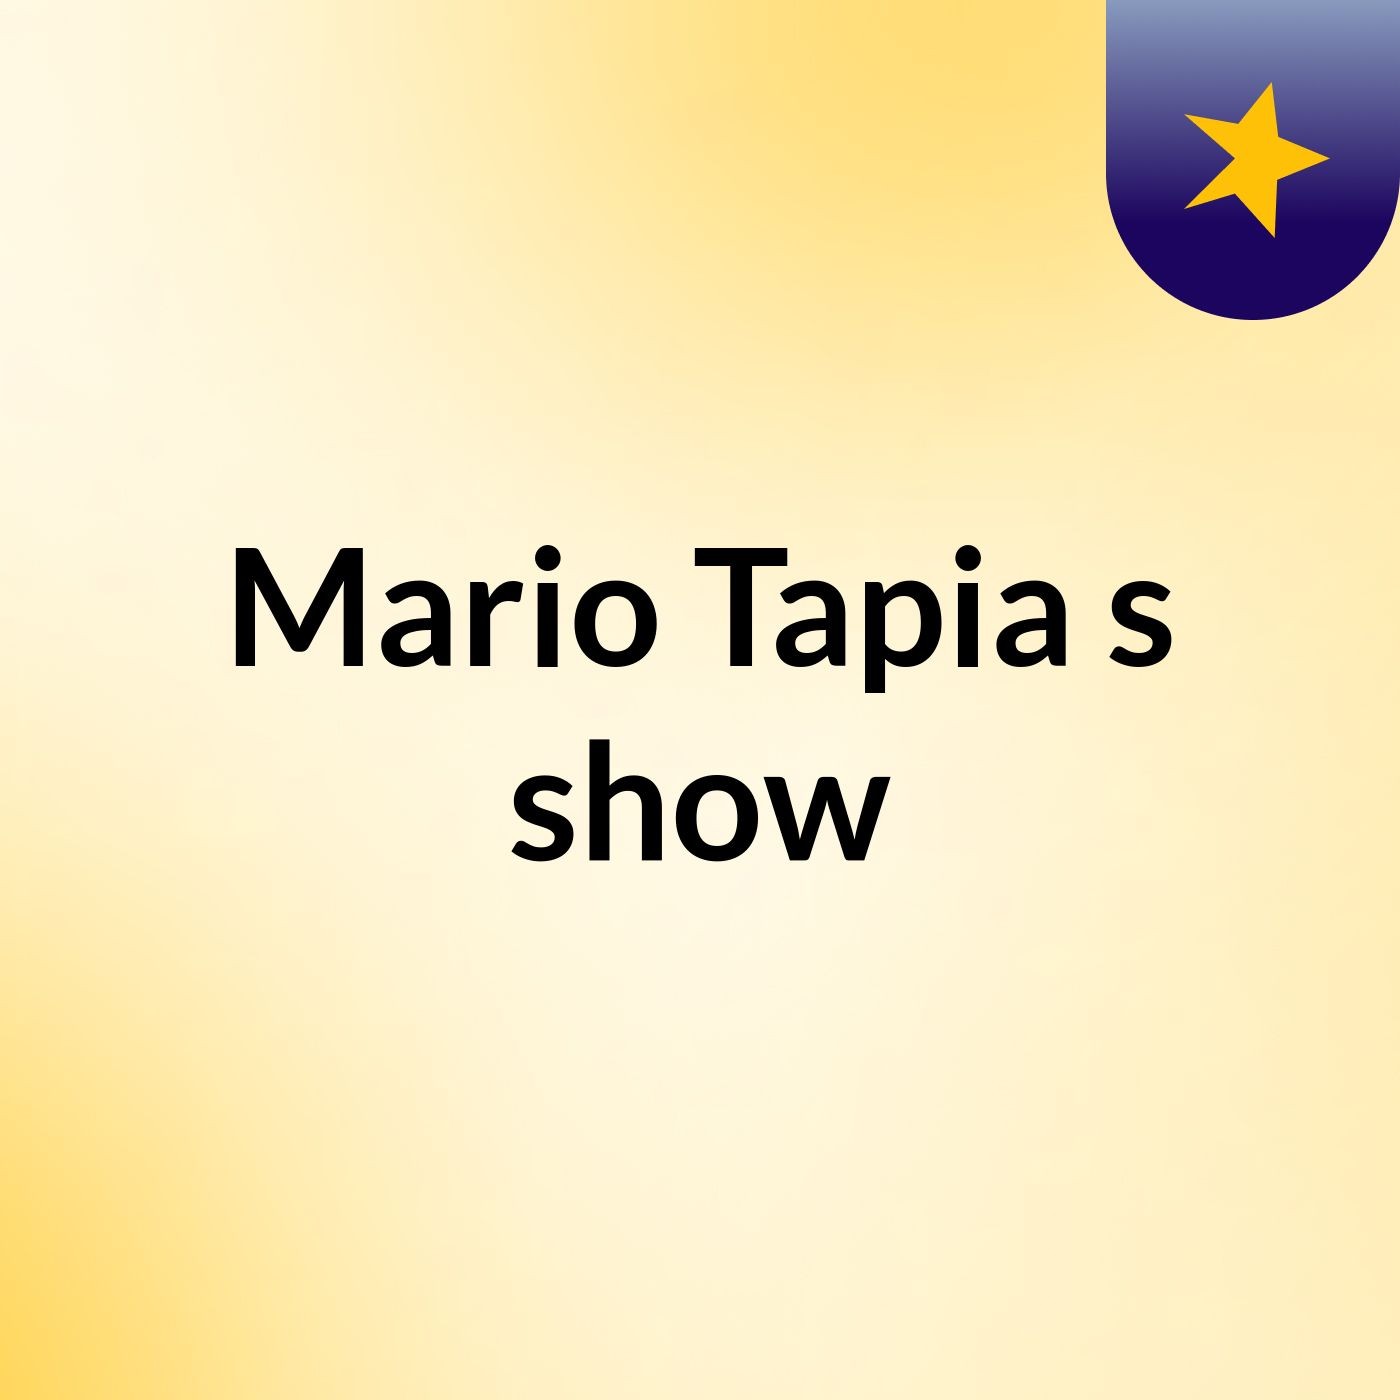 Mario Tapia's show